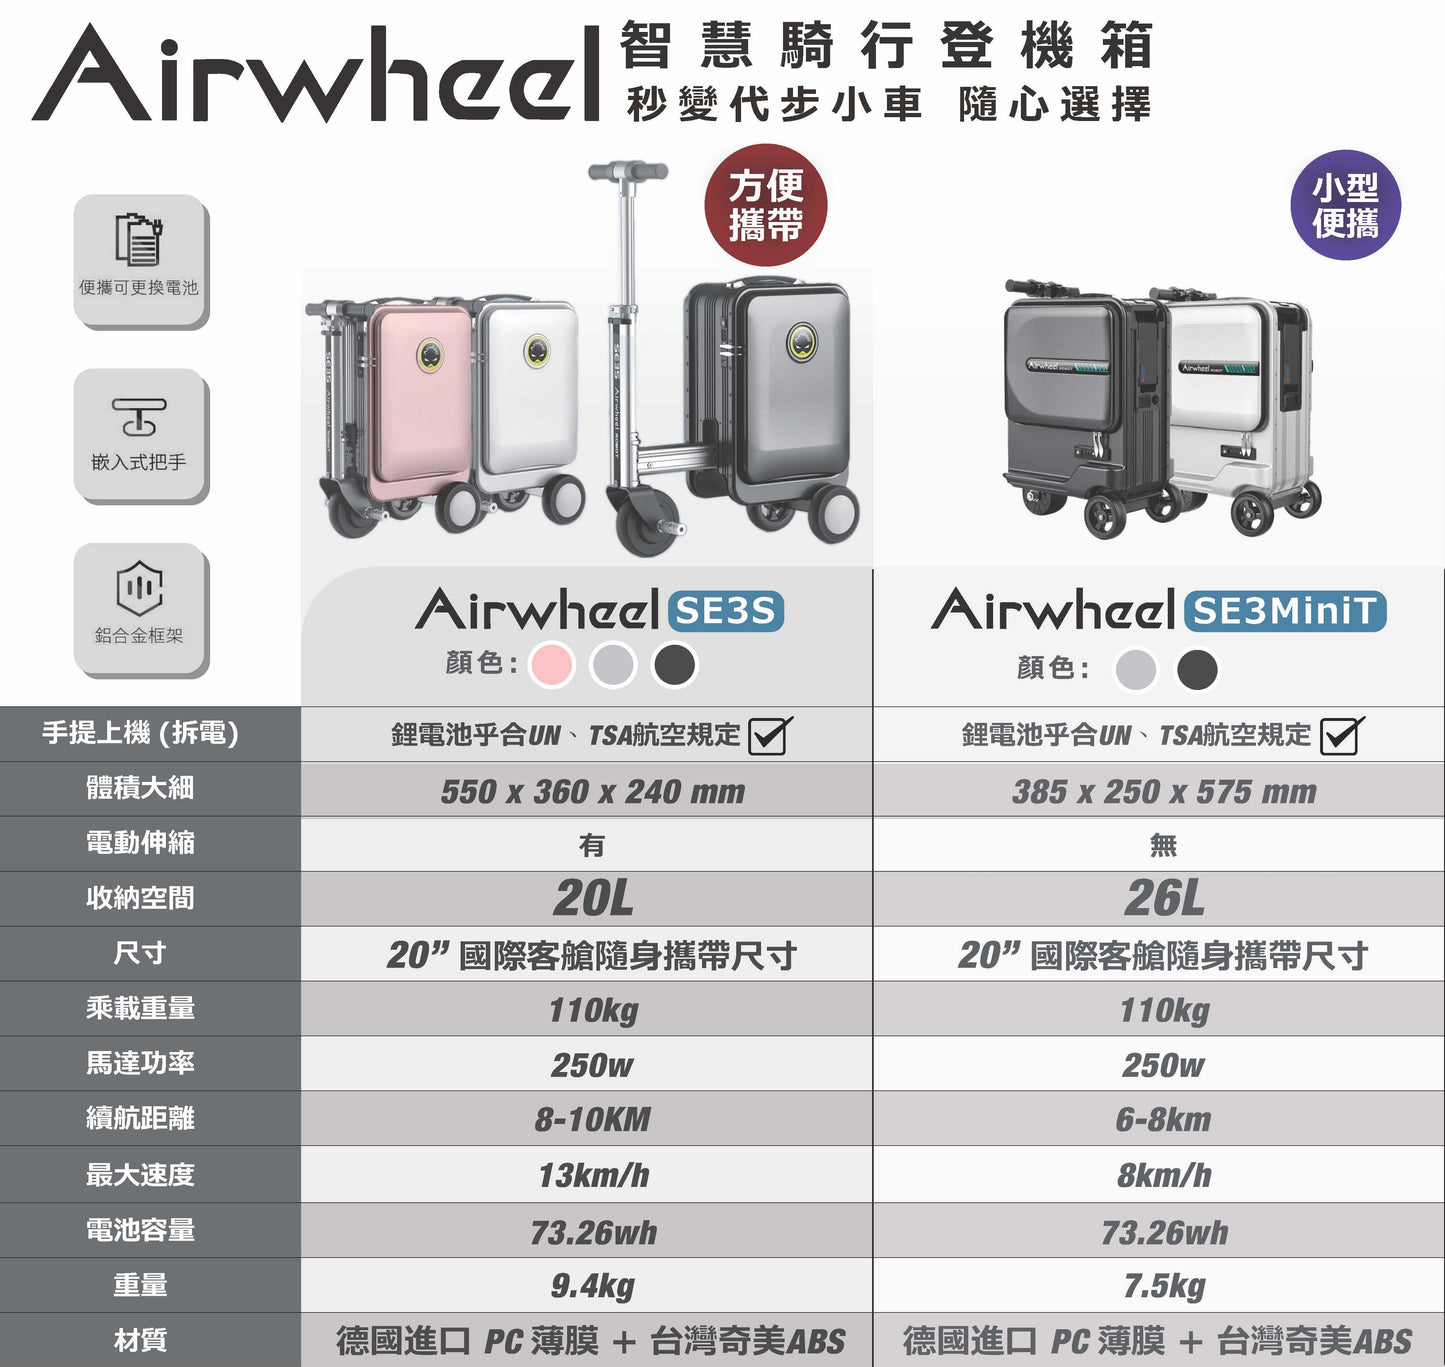 Airwheel 20" 智能電動行李箱 可登機 26L 容量 SE3miniT